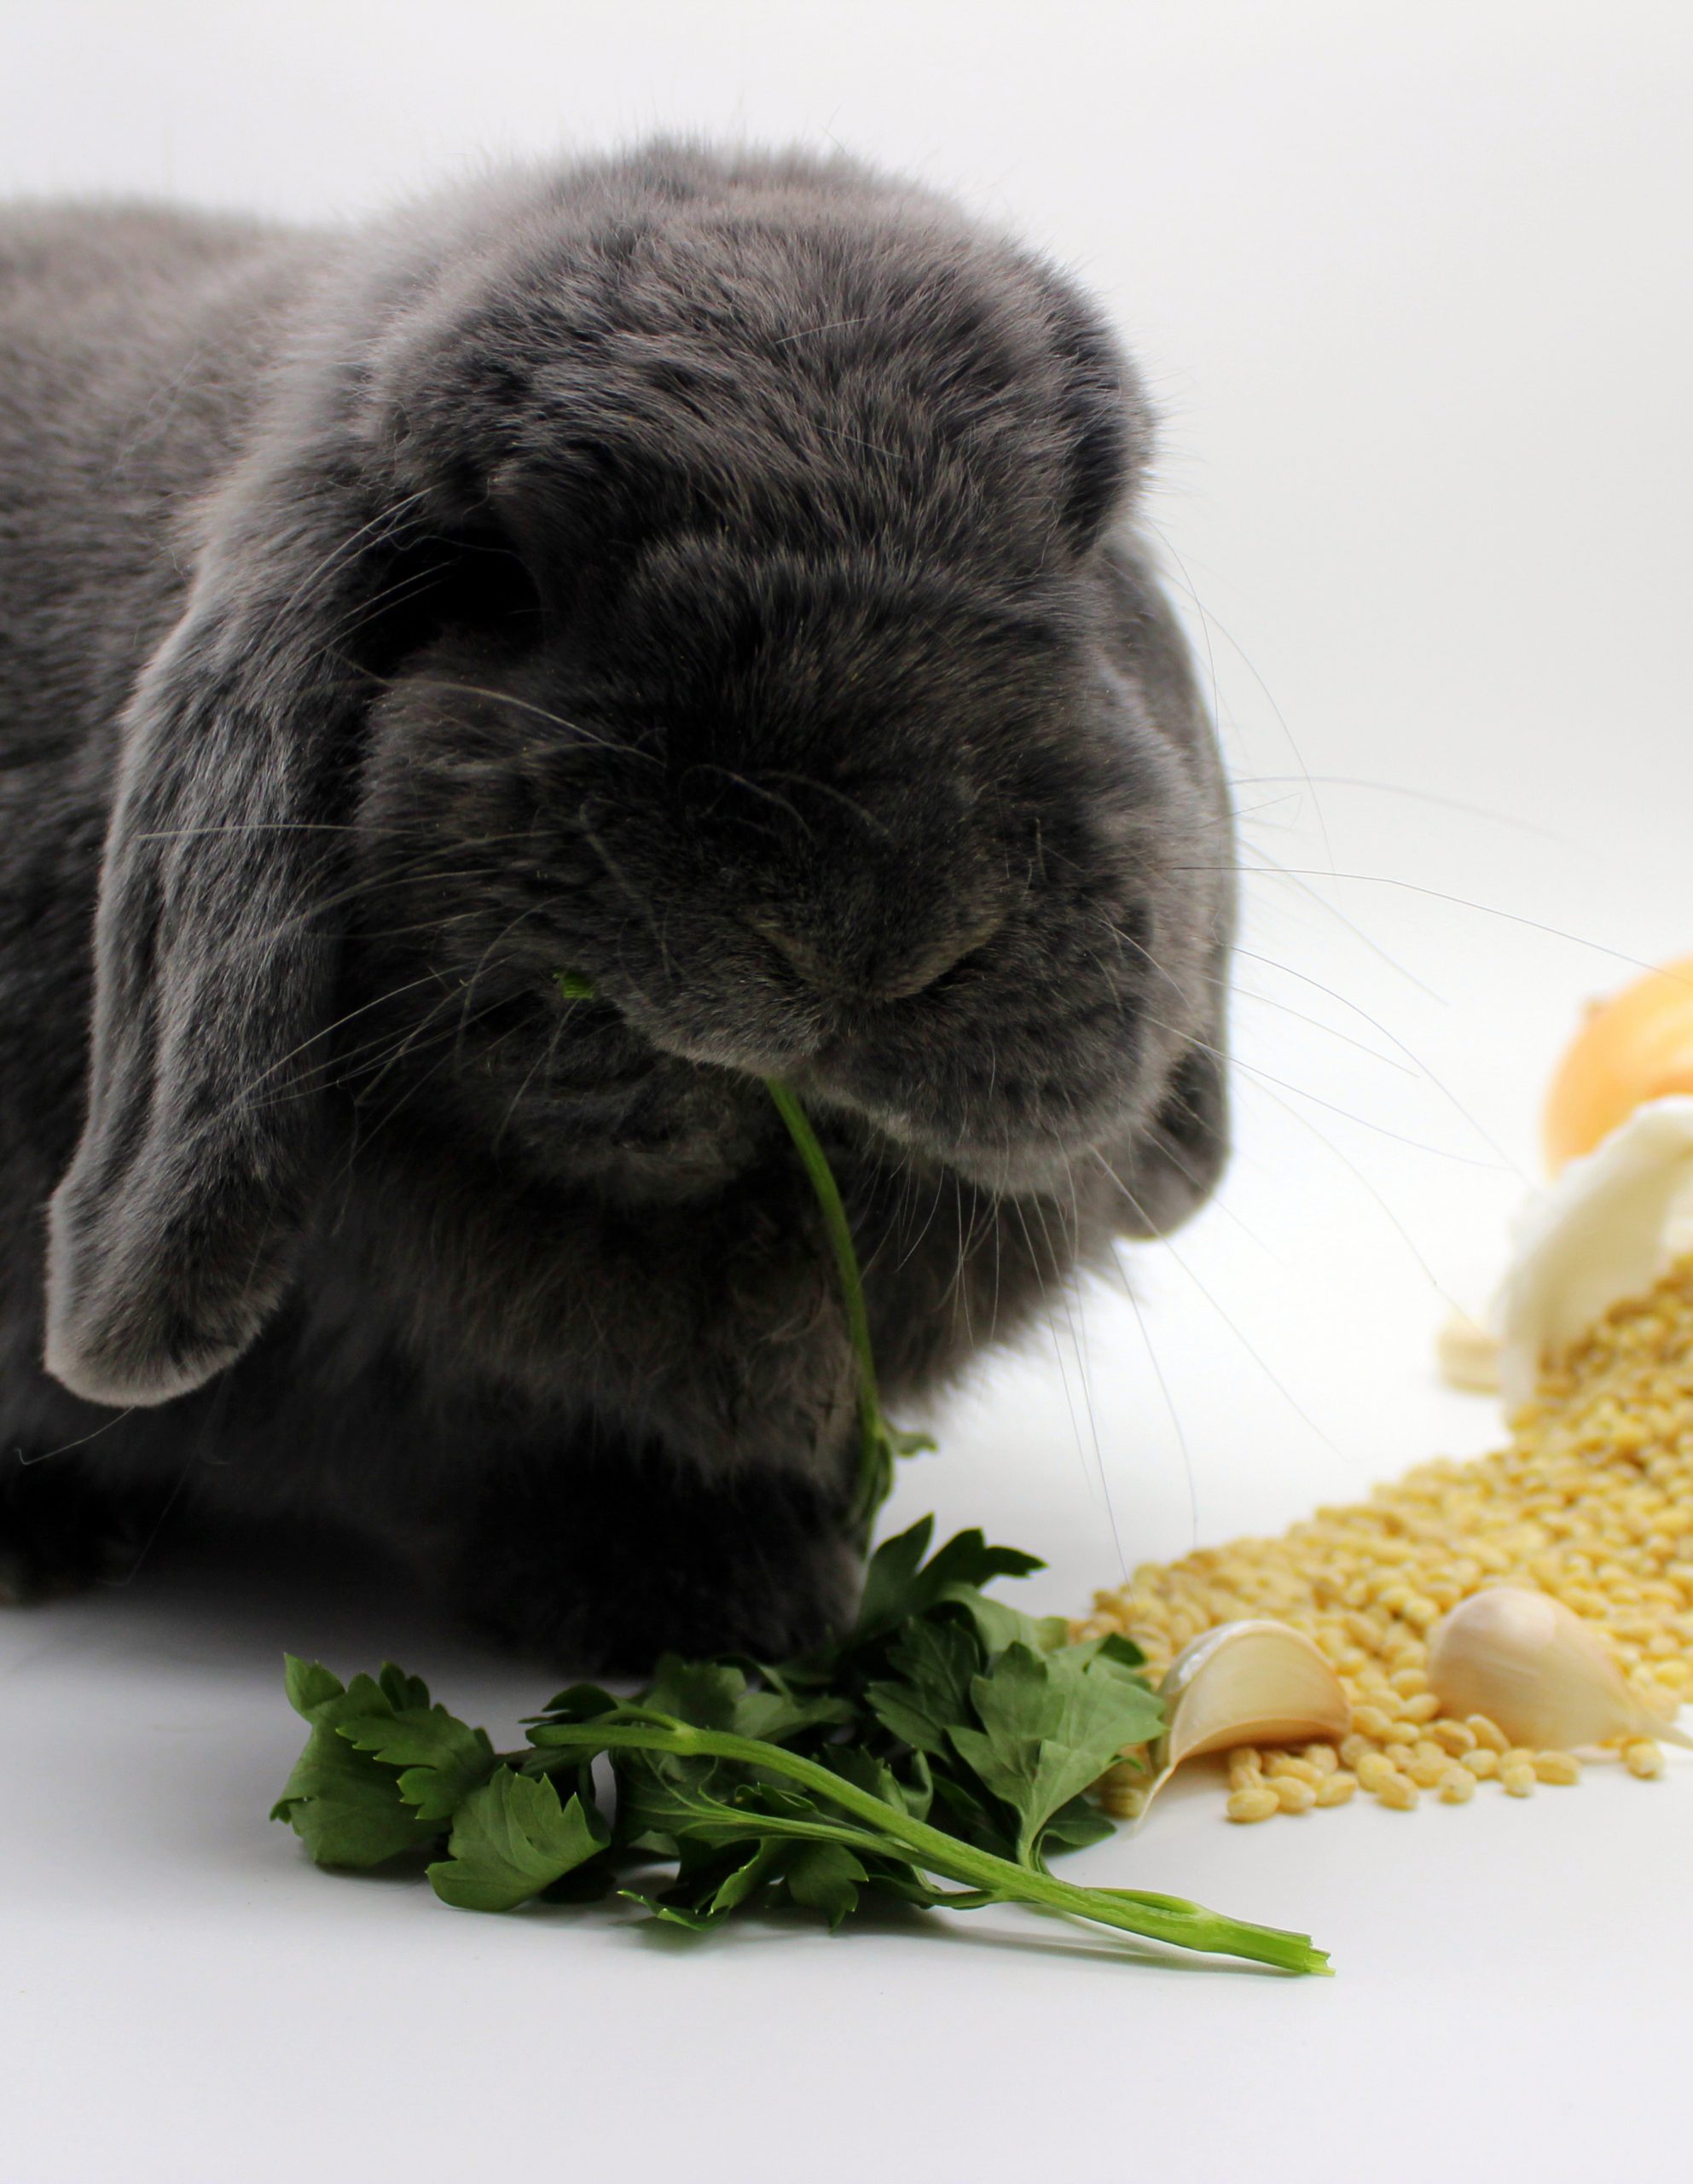 Grey bunny eating parsley